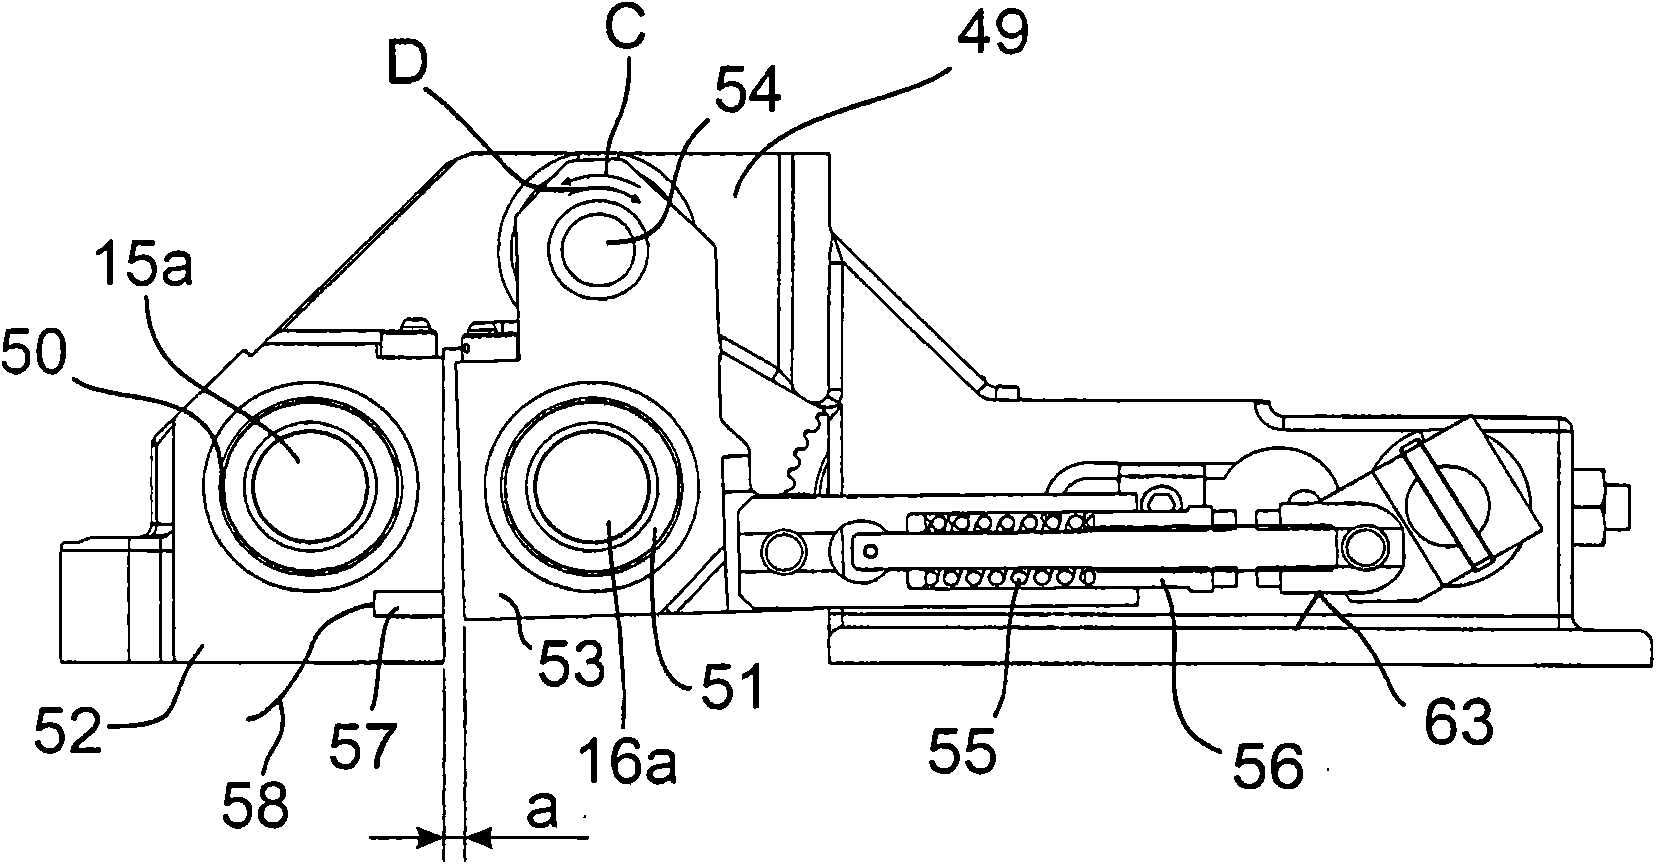 Apparatus used on spinning room preparation machine